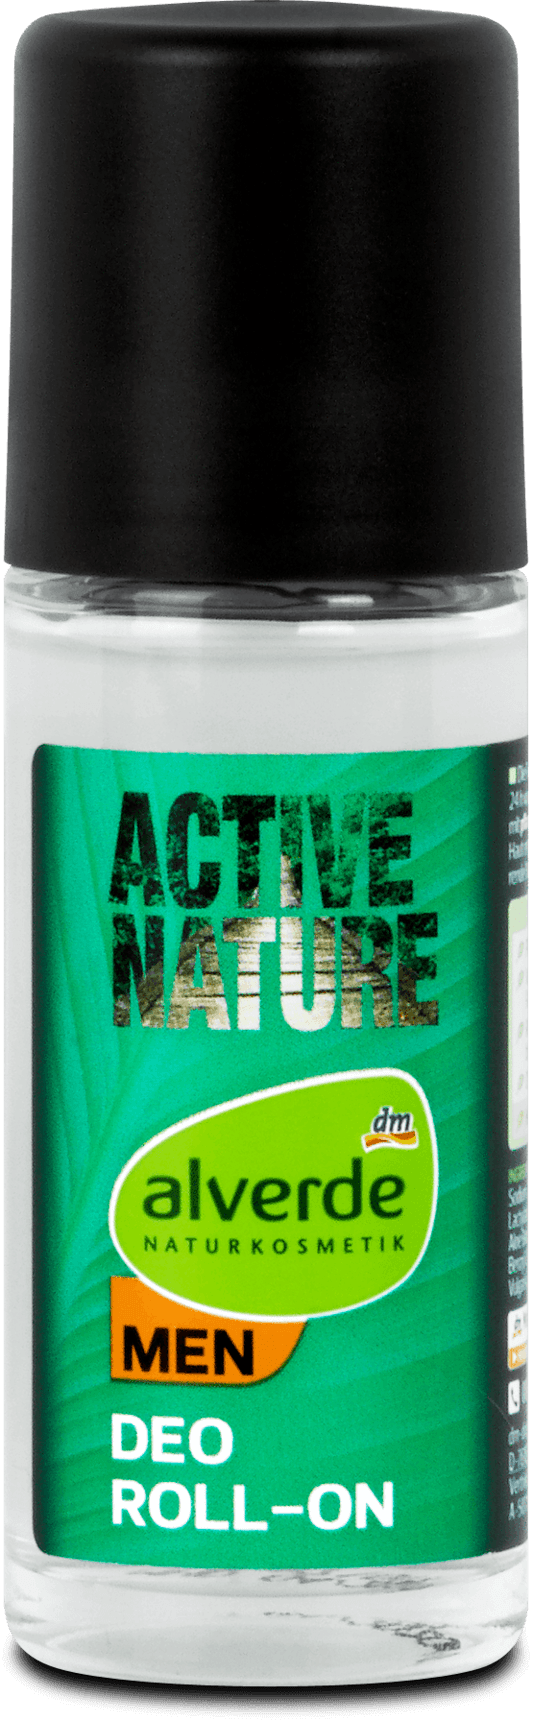 alverde MEN Deo roll on, Active Nature, 50 ml